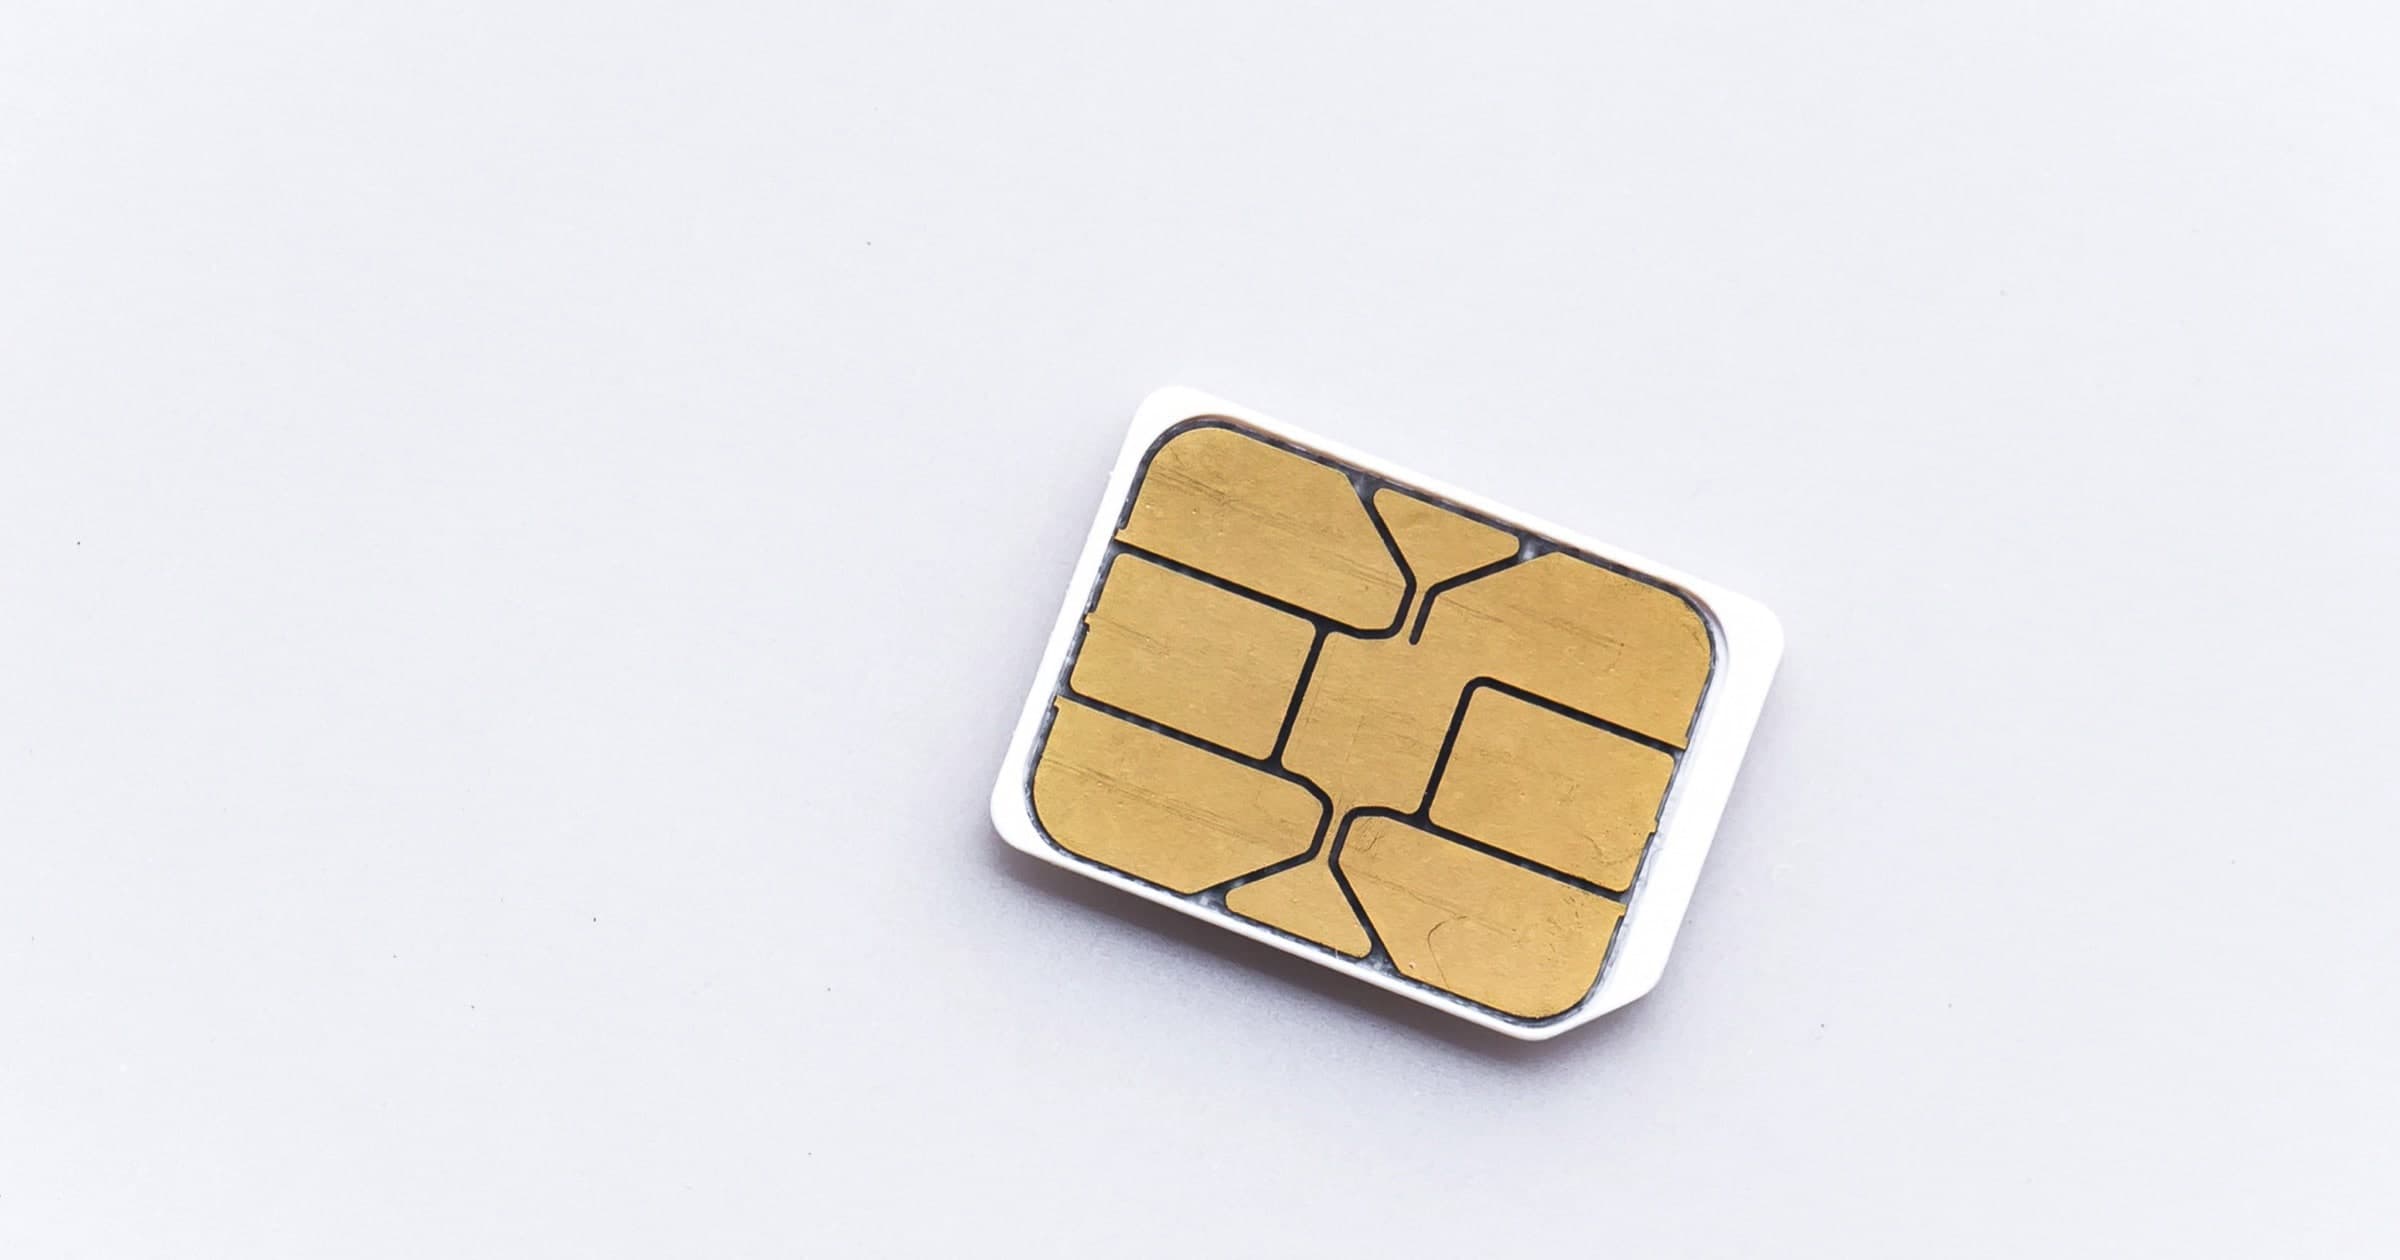 nano SIM card